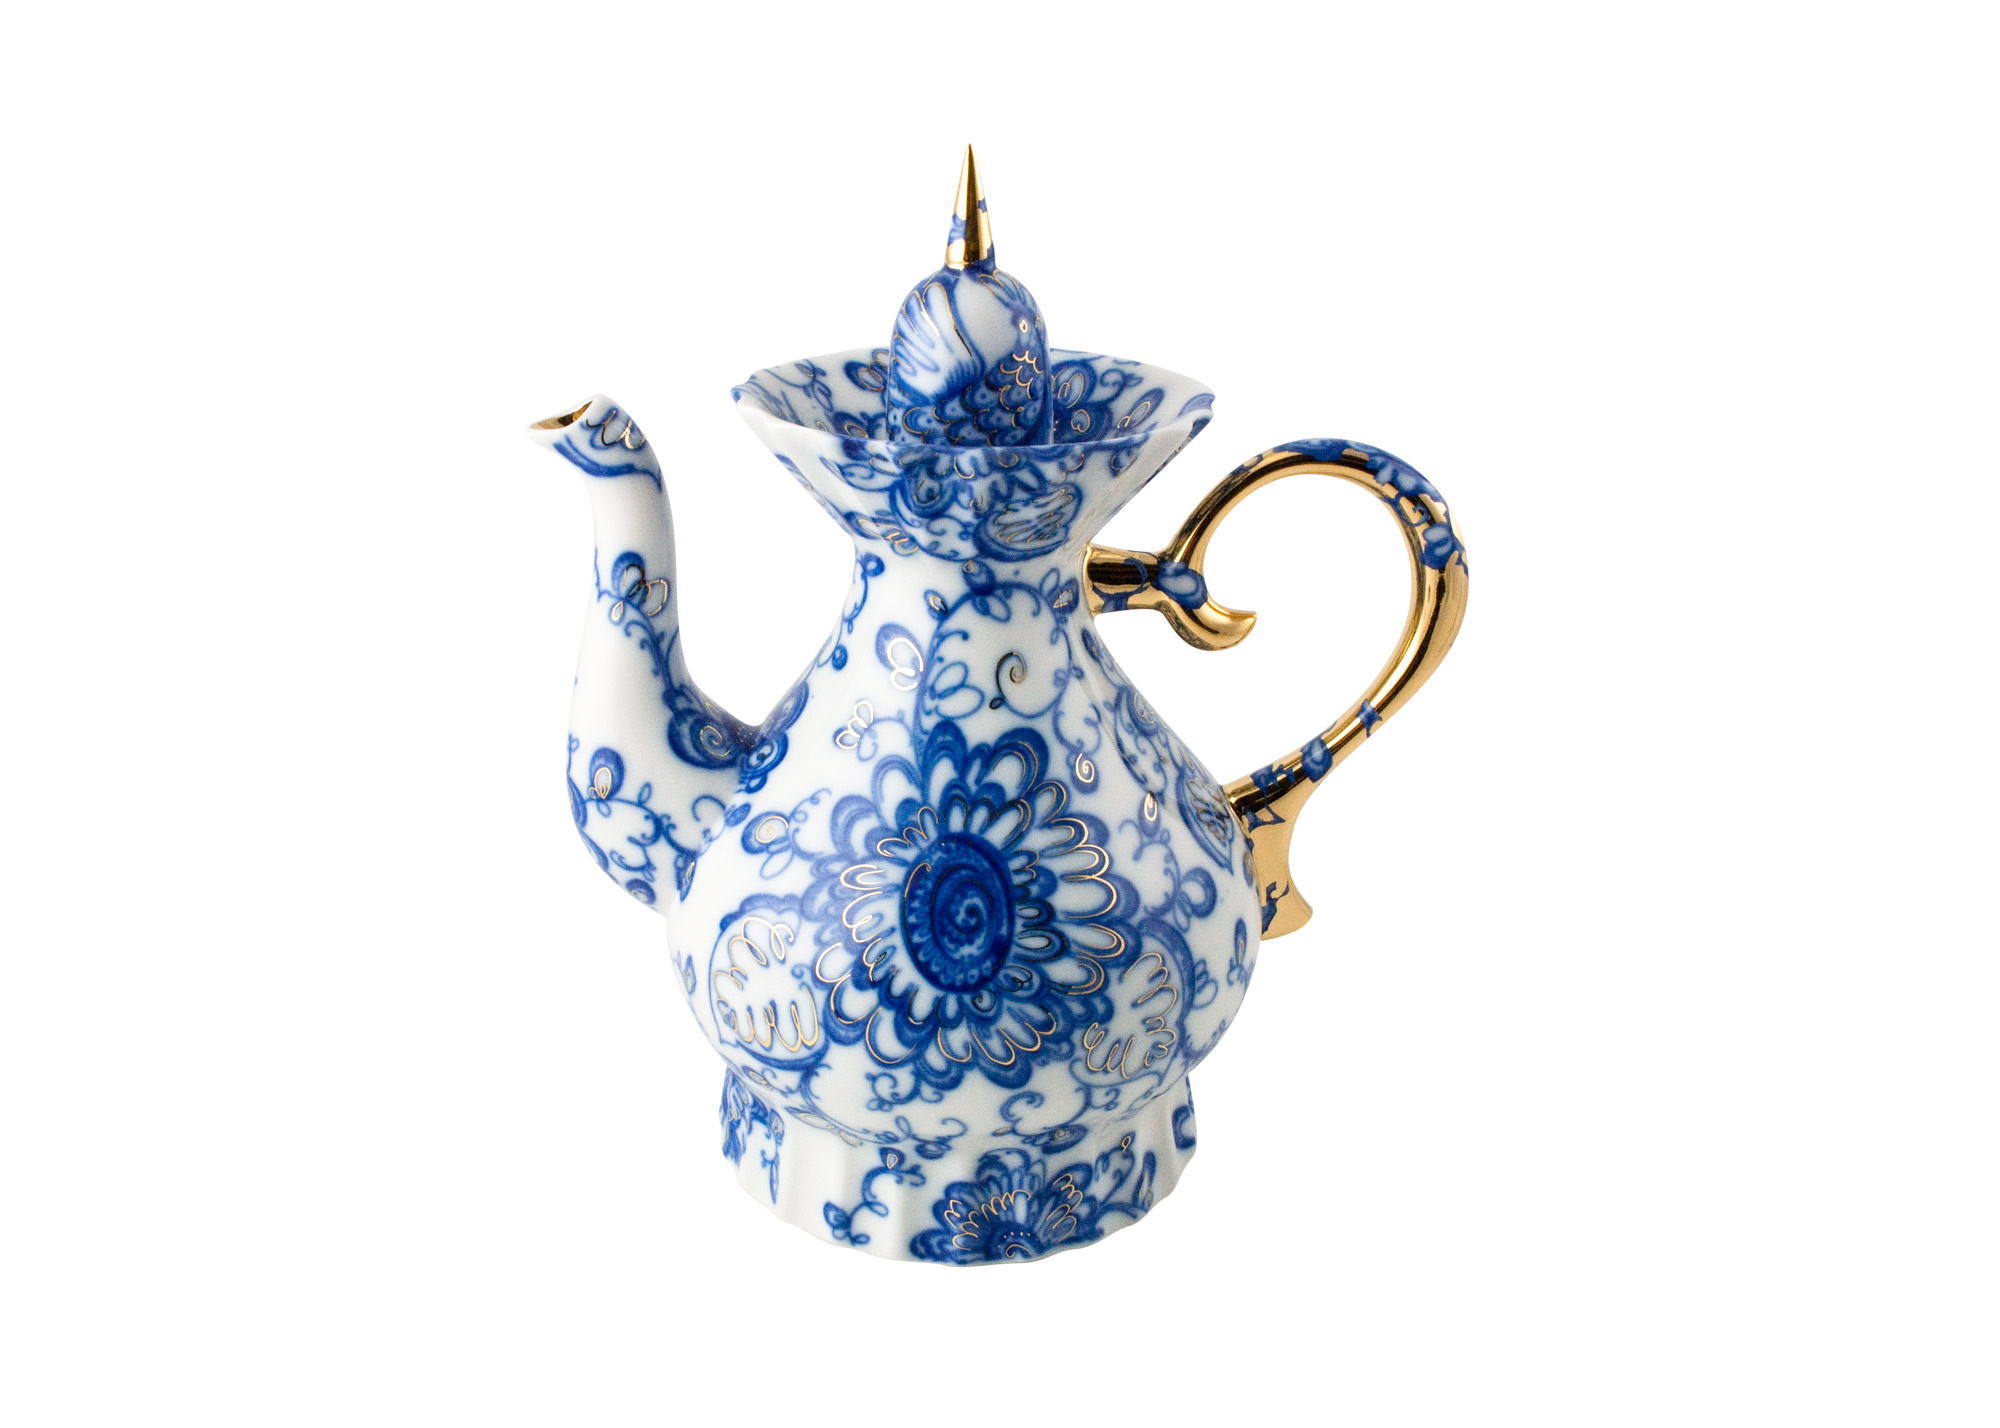 Buy Singing Garden Porcelain Teapot at GoldenCockerel.com